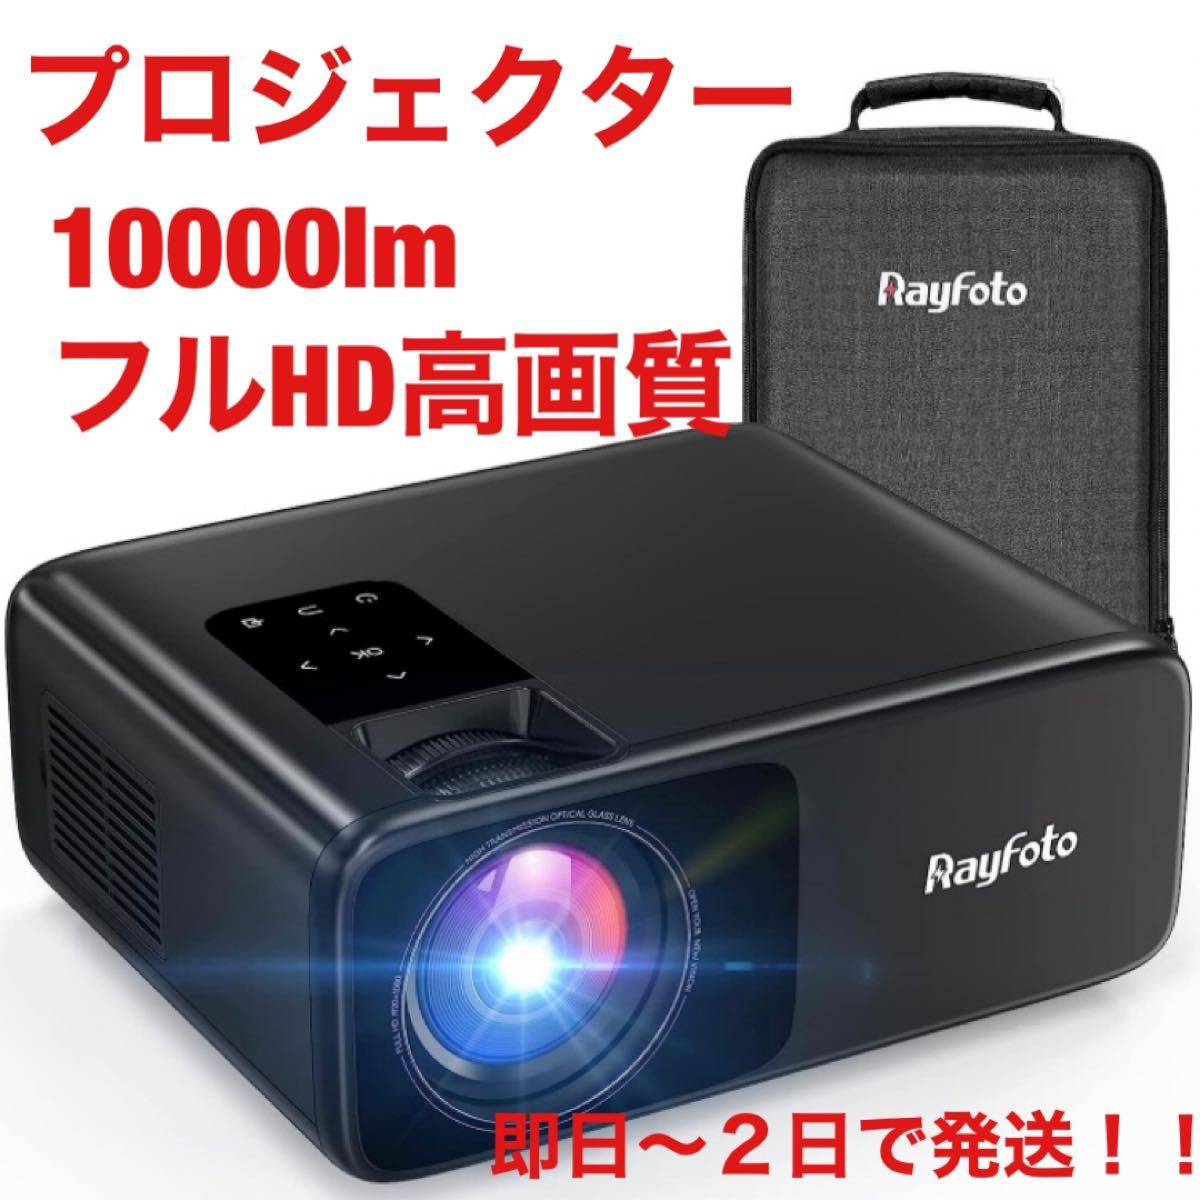 Rayfoto WiFi プロジェクター 4K 10000lm 1080pフルHD 高画質 小型